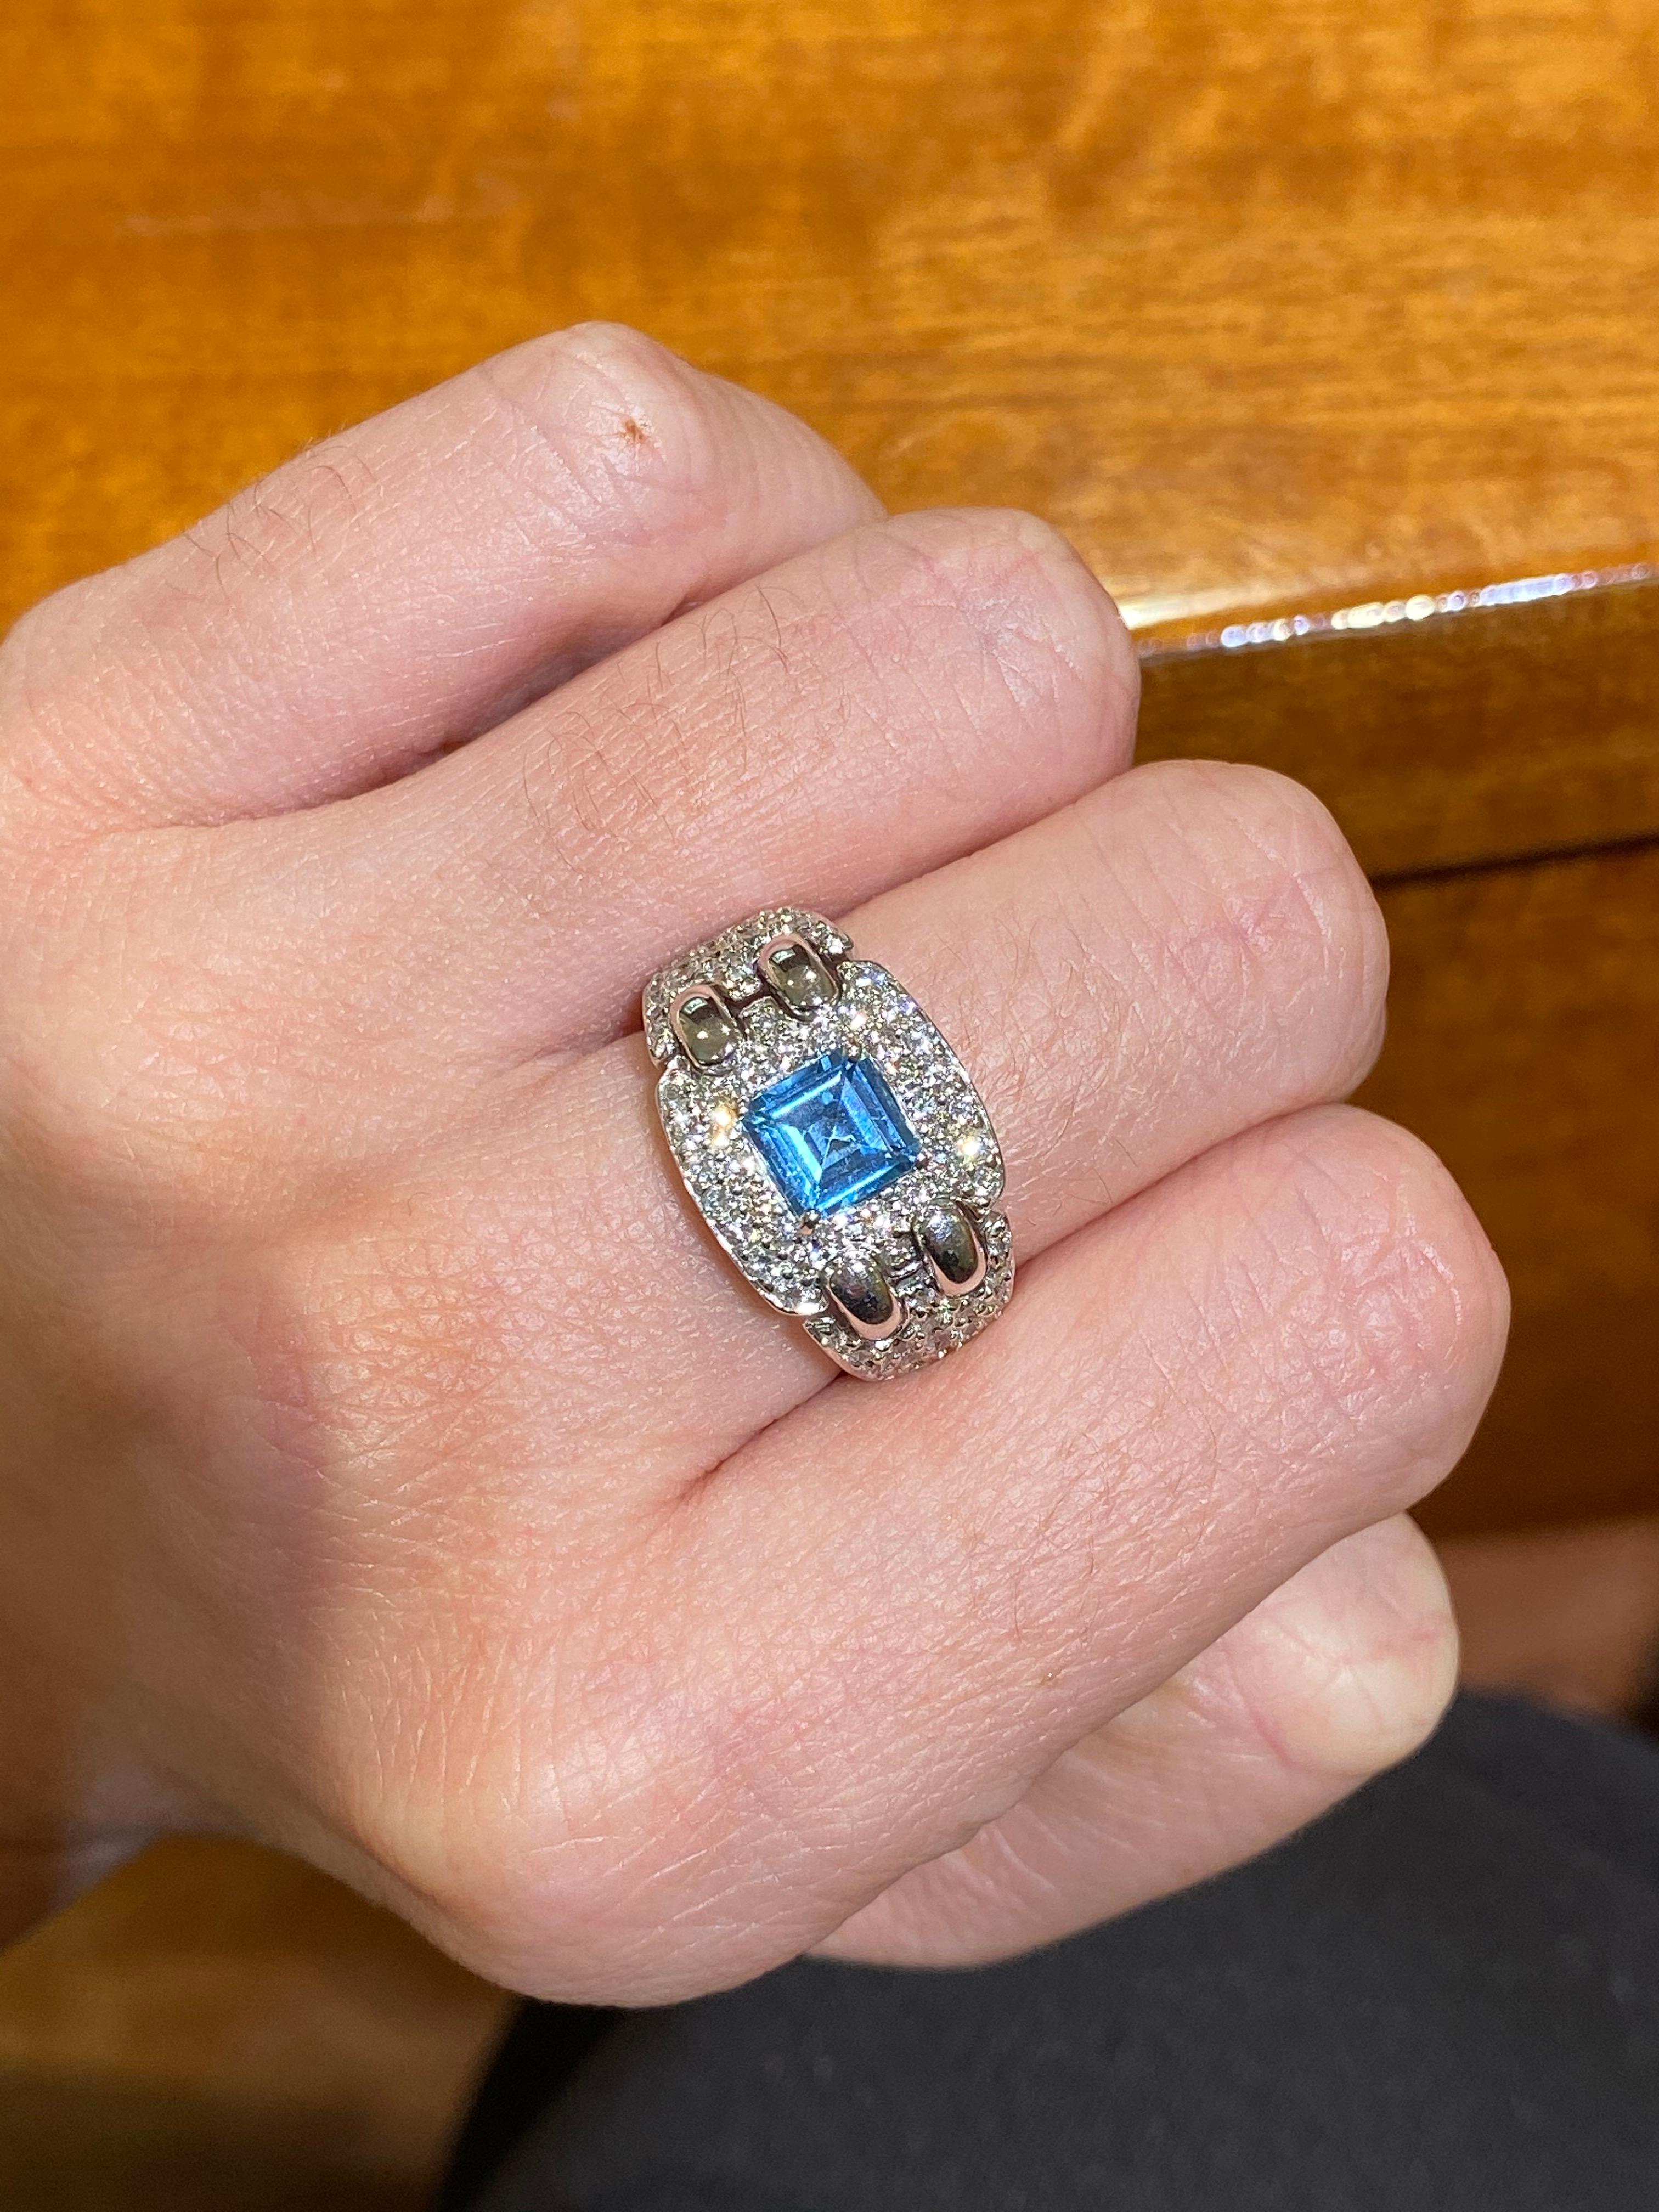 Hammerman Jewels 18 Karat White Gold Diamond and Blue Topaz Ring. 1.29 carats of diamonds, 0.96 carat blue topaz. Size 6.